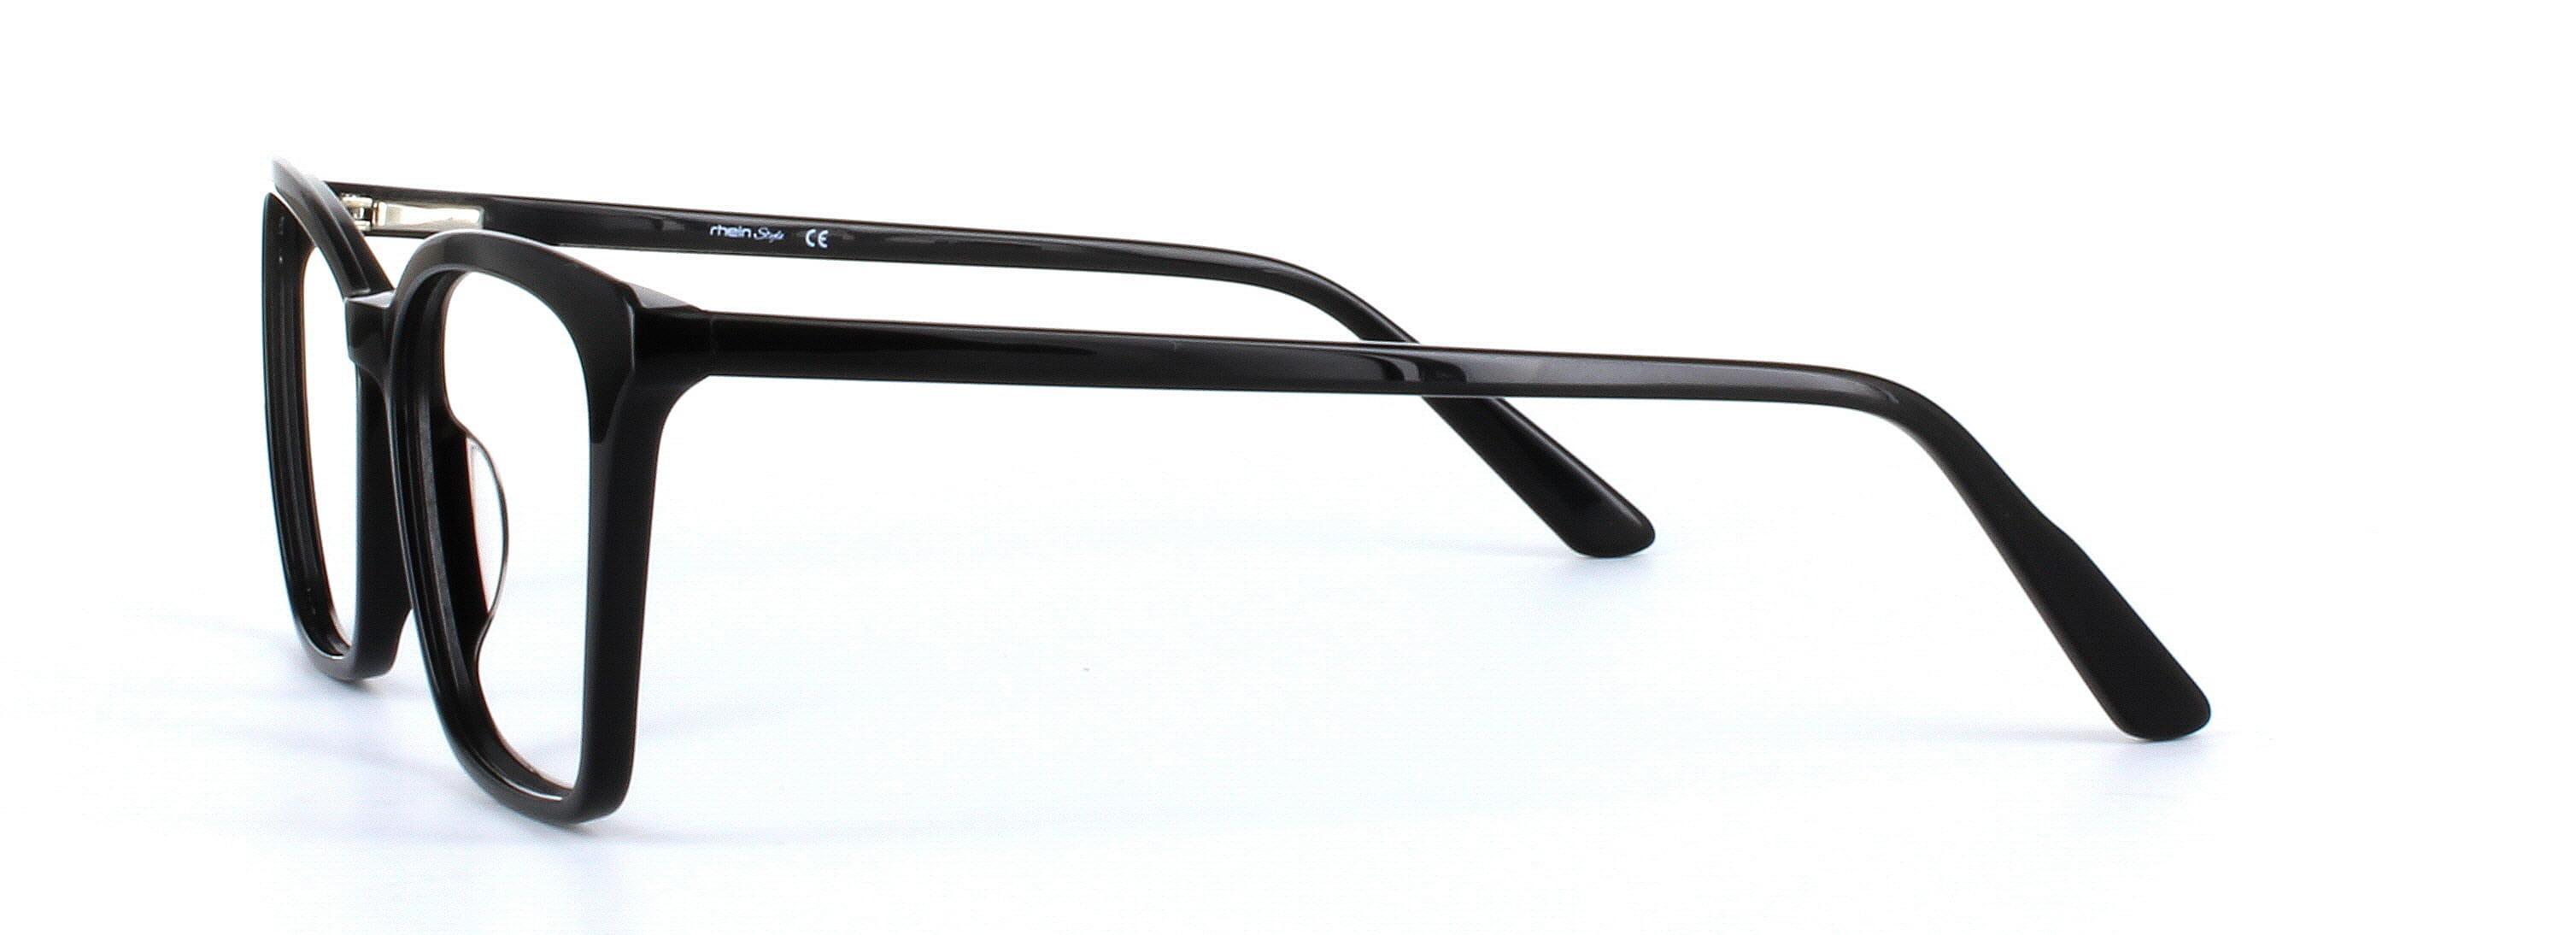 Caelan Black Full Rim Square Plastic Glasses - Image View 2